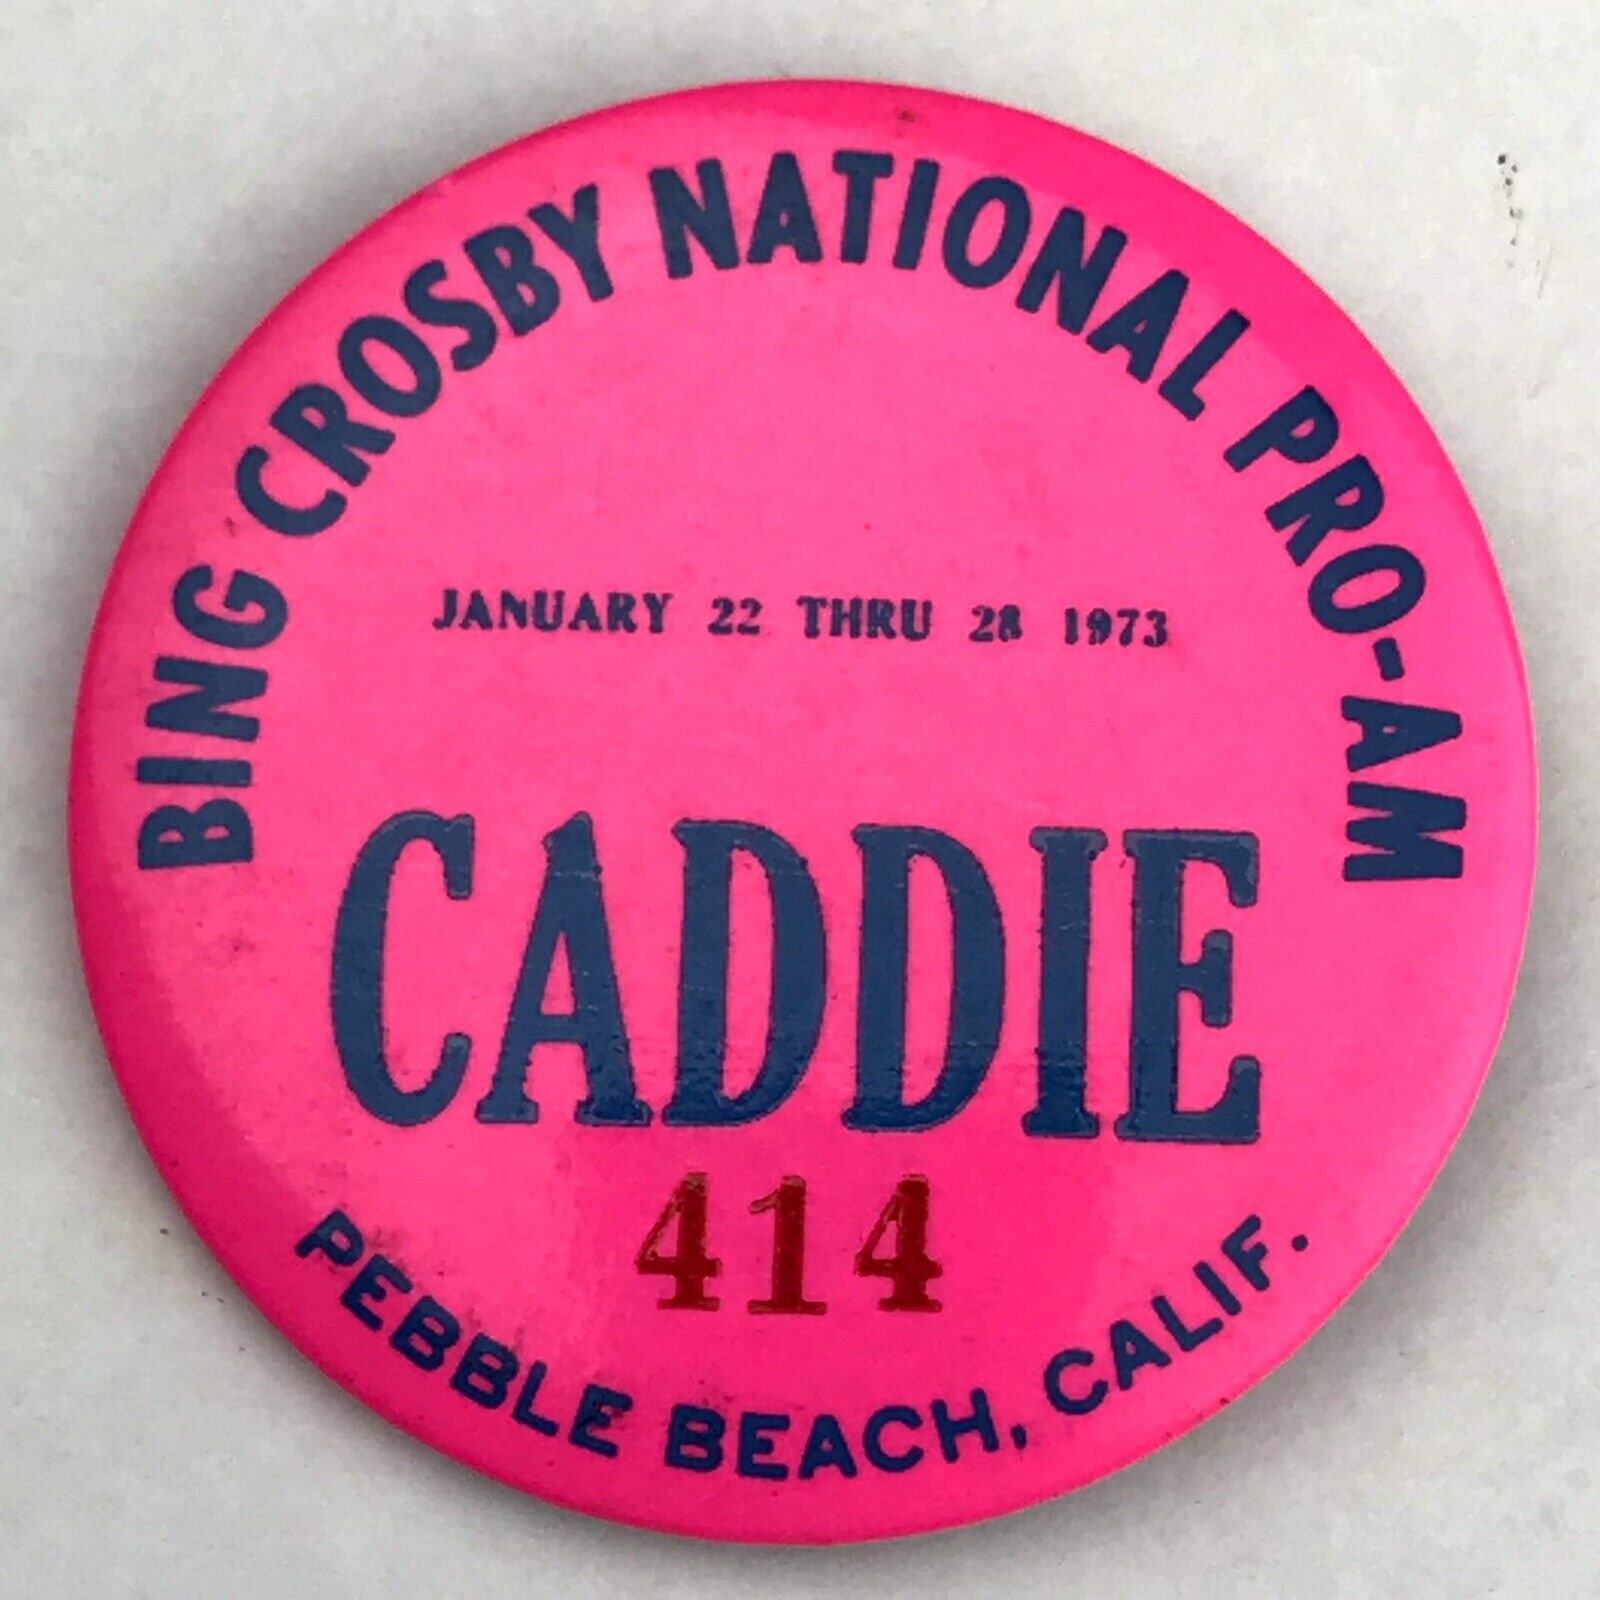 Bing Crosby National Pro-Am Caddie Badge 1973 Pin Button 70s Pebble Beach Golf